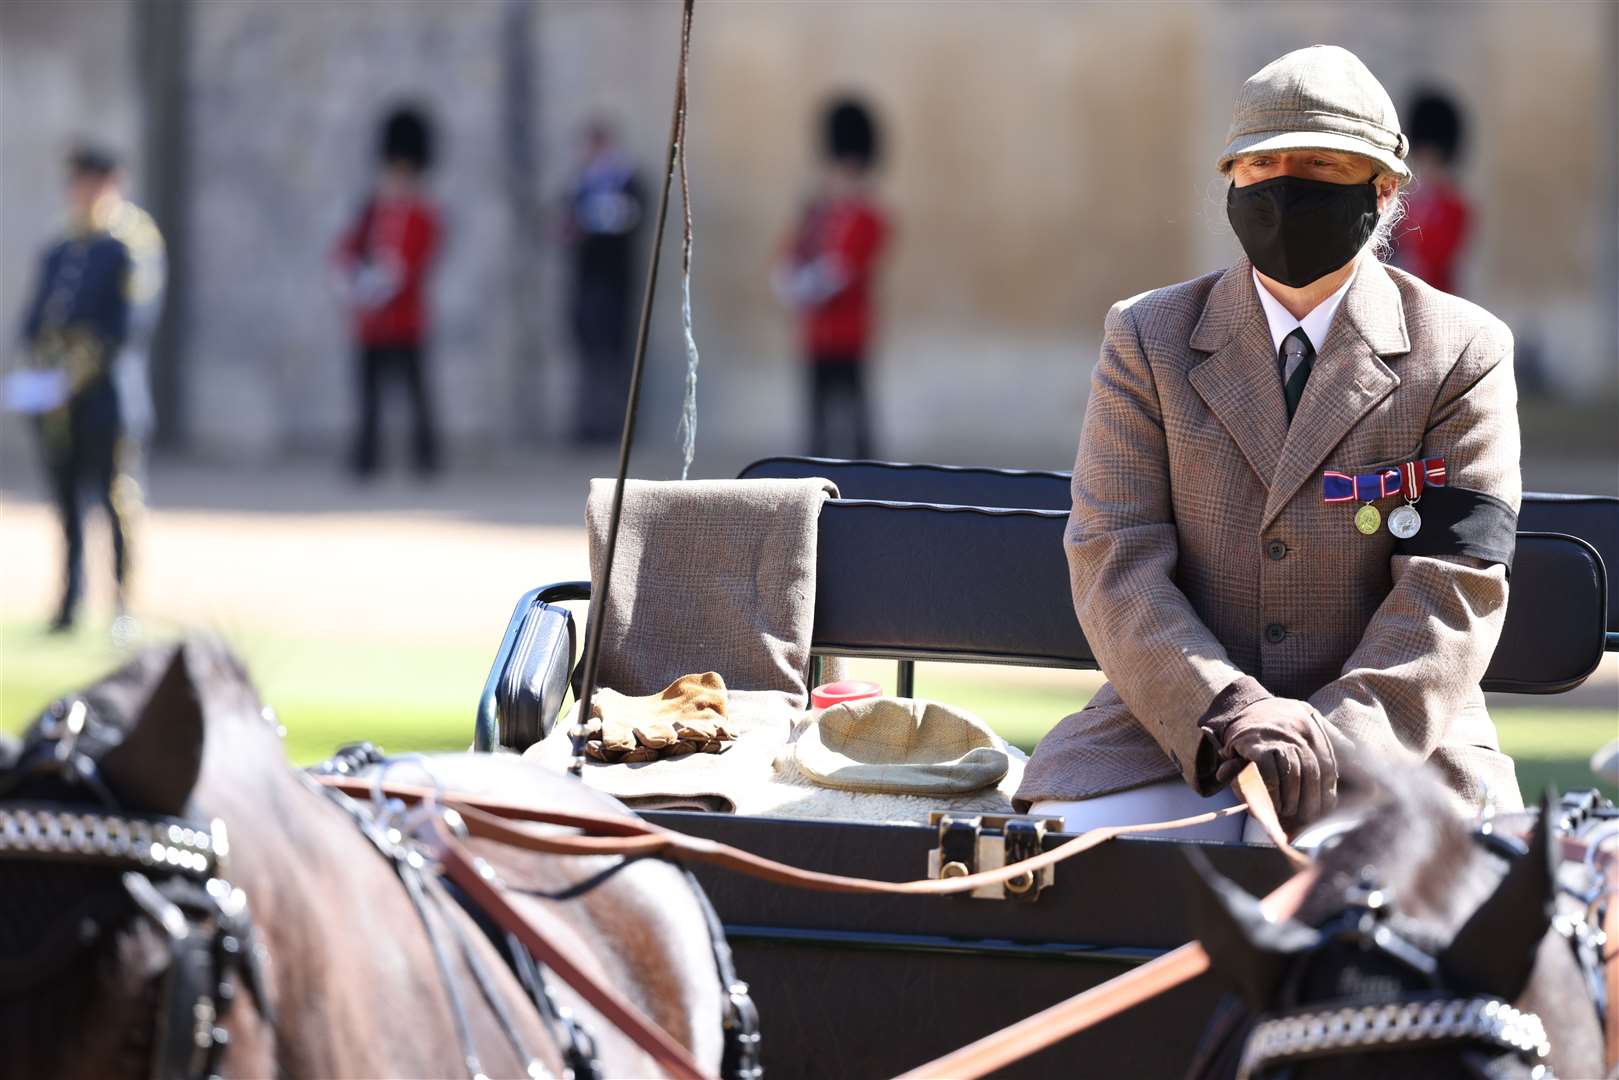 The Duke of Edinburgh’s driving carriage arrives in the Quadrangle (Ian Vogler/Daily Mirror)